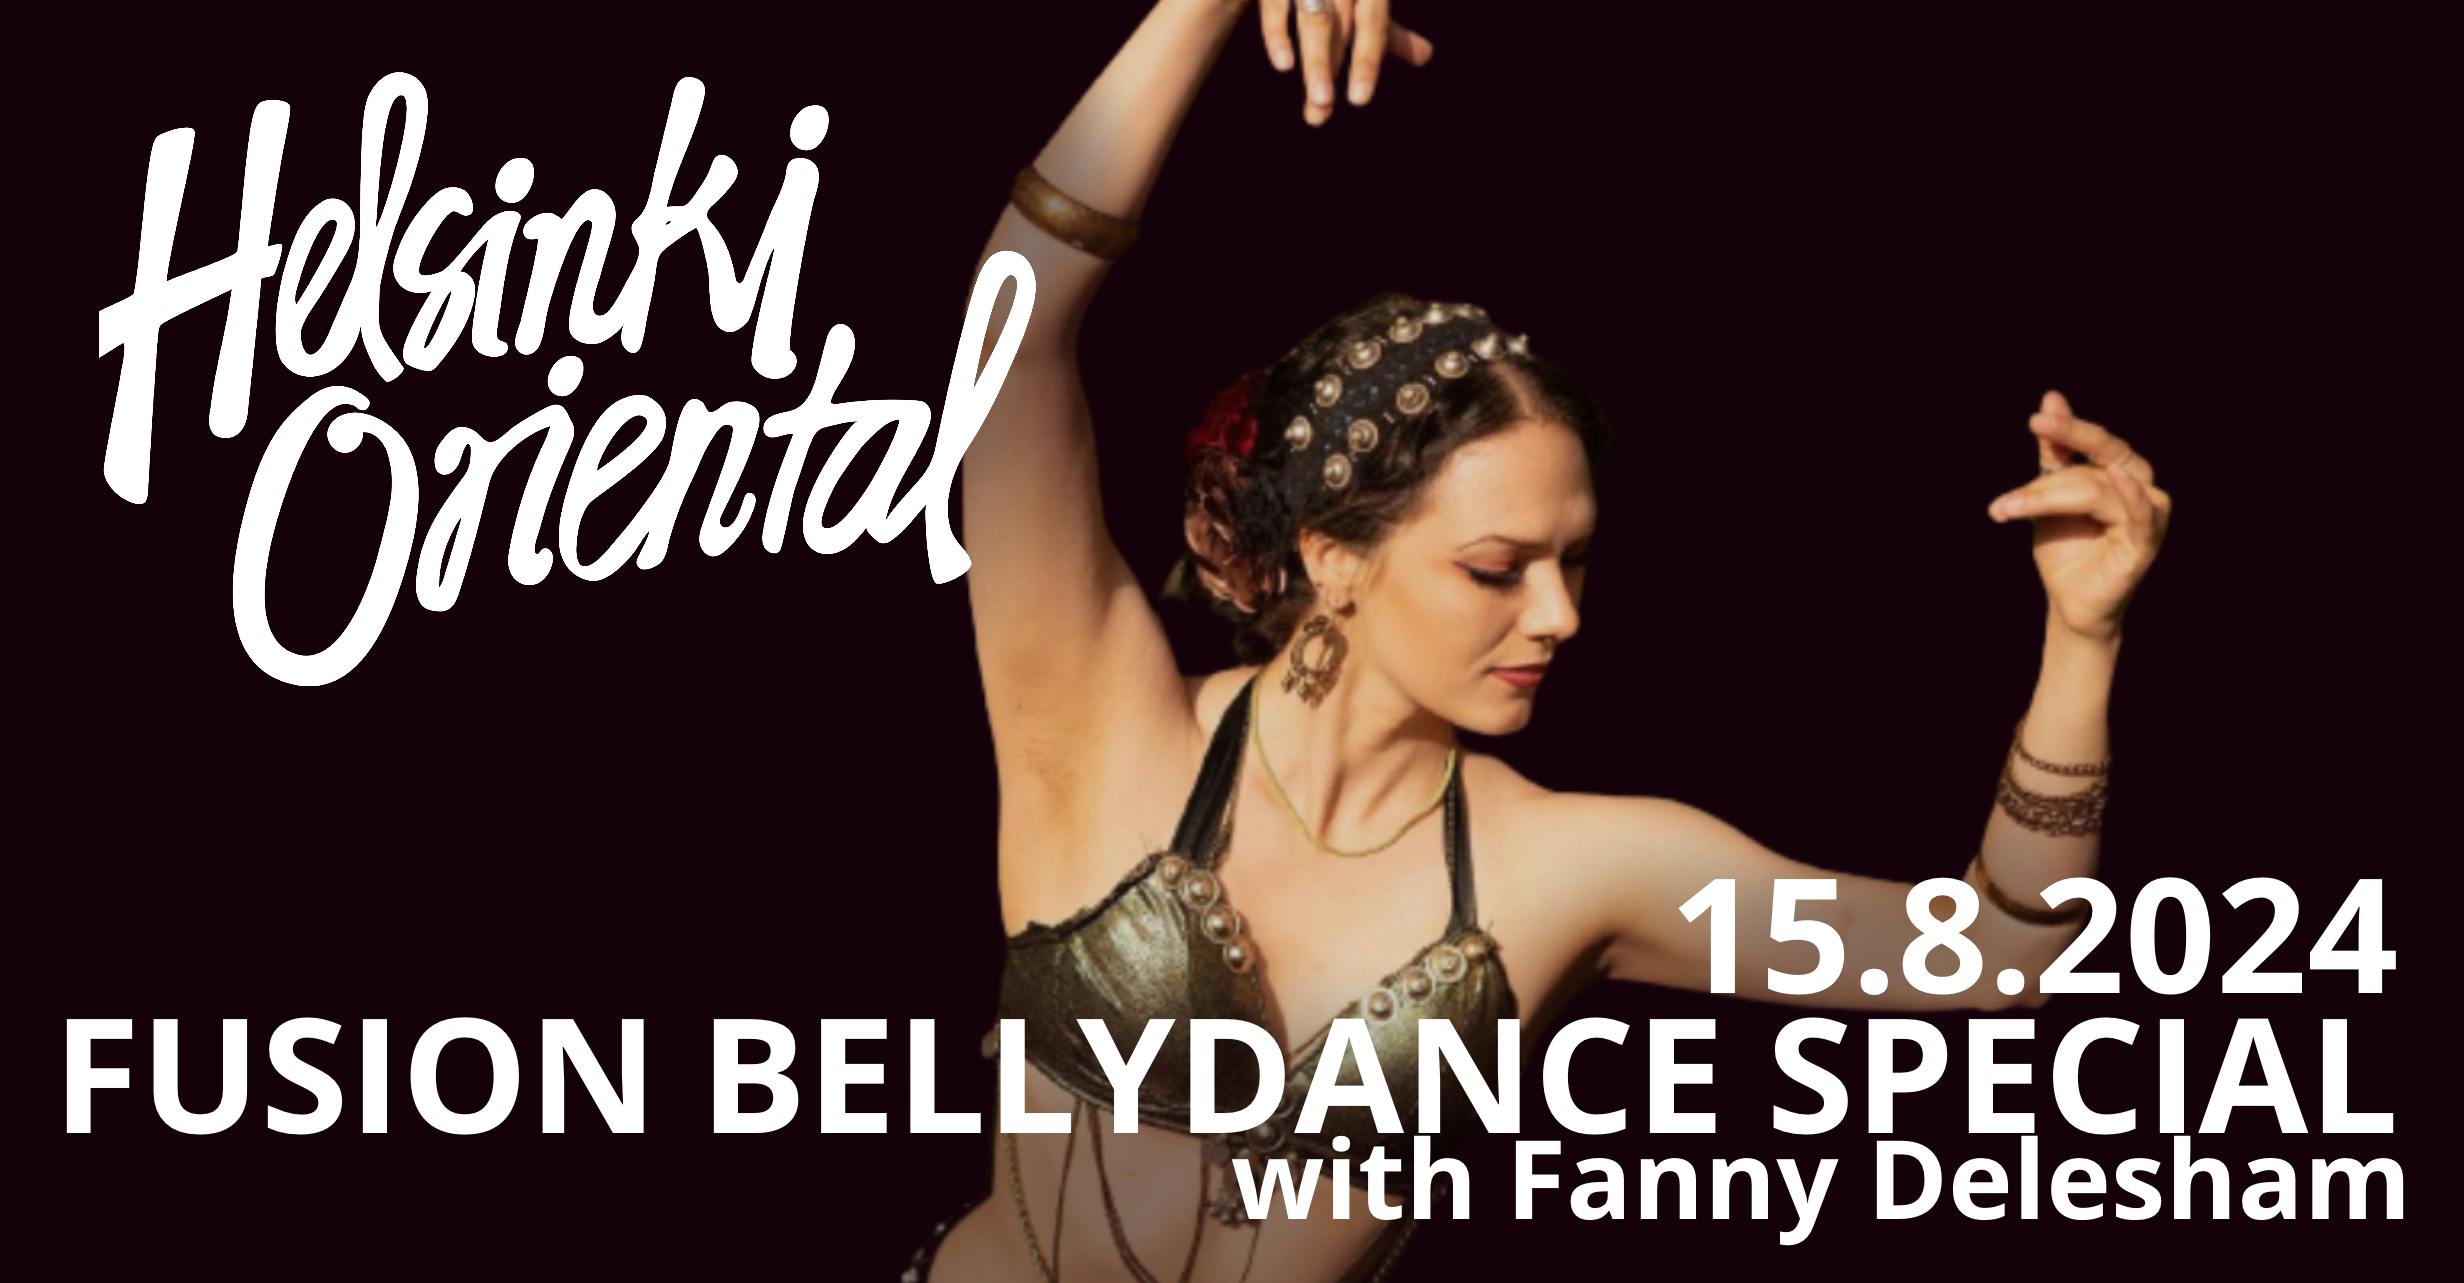 Helsinki Oriental Fusion Bellydance Special with Fanny Delesham 15.8.2024